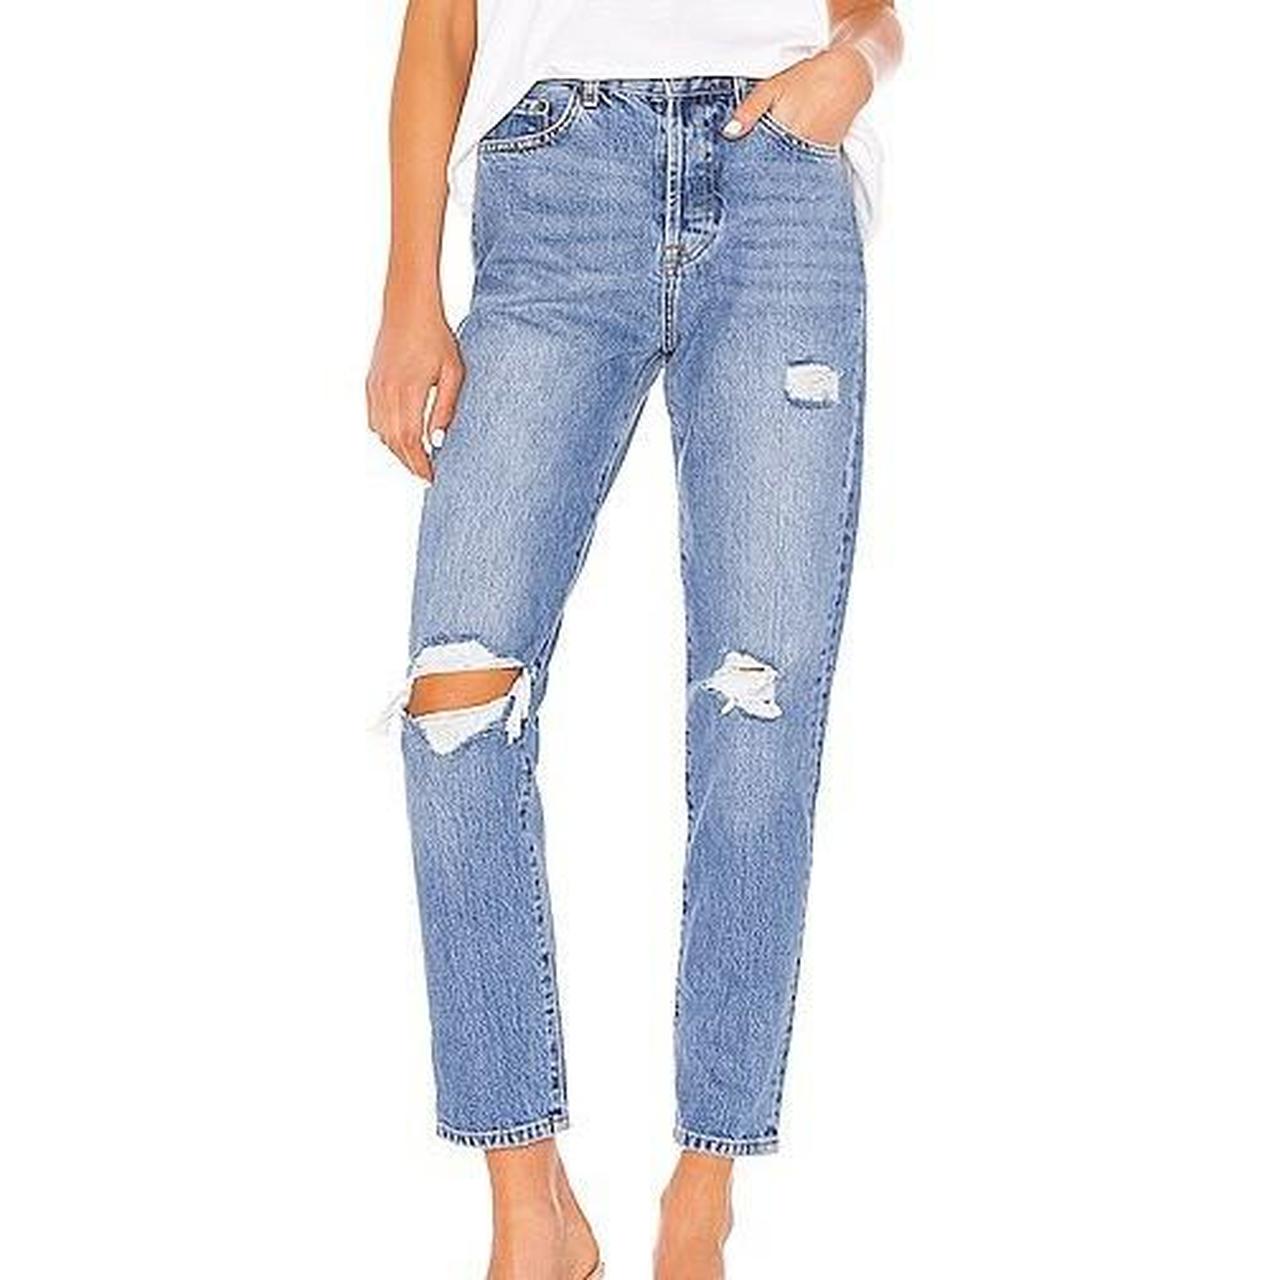 Anine Bing Distressed jeans Style is Brenda... - Depop